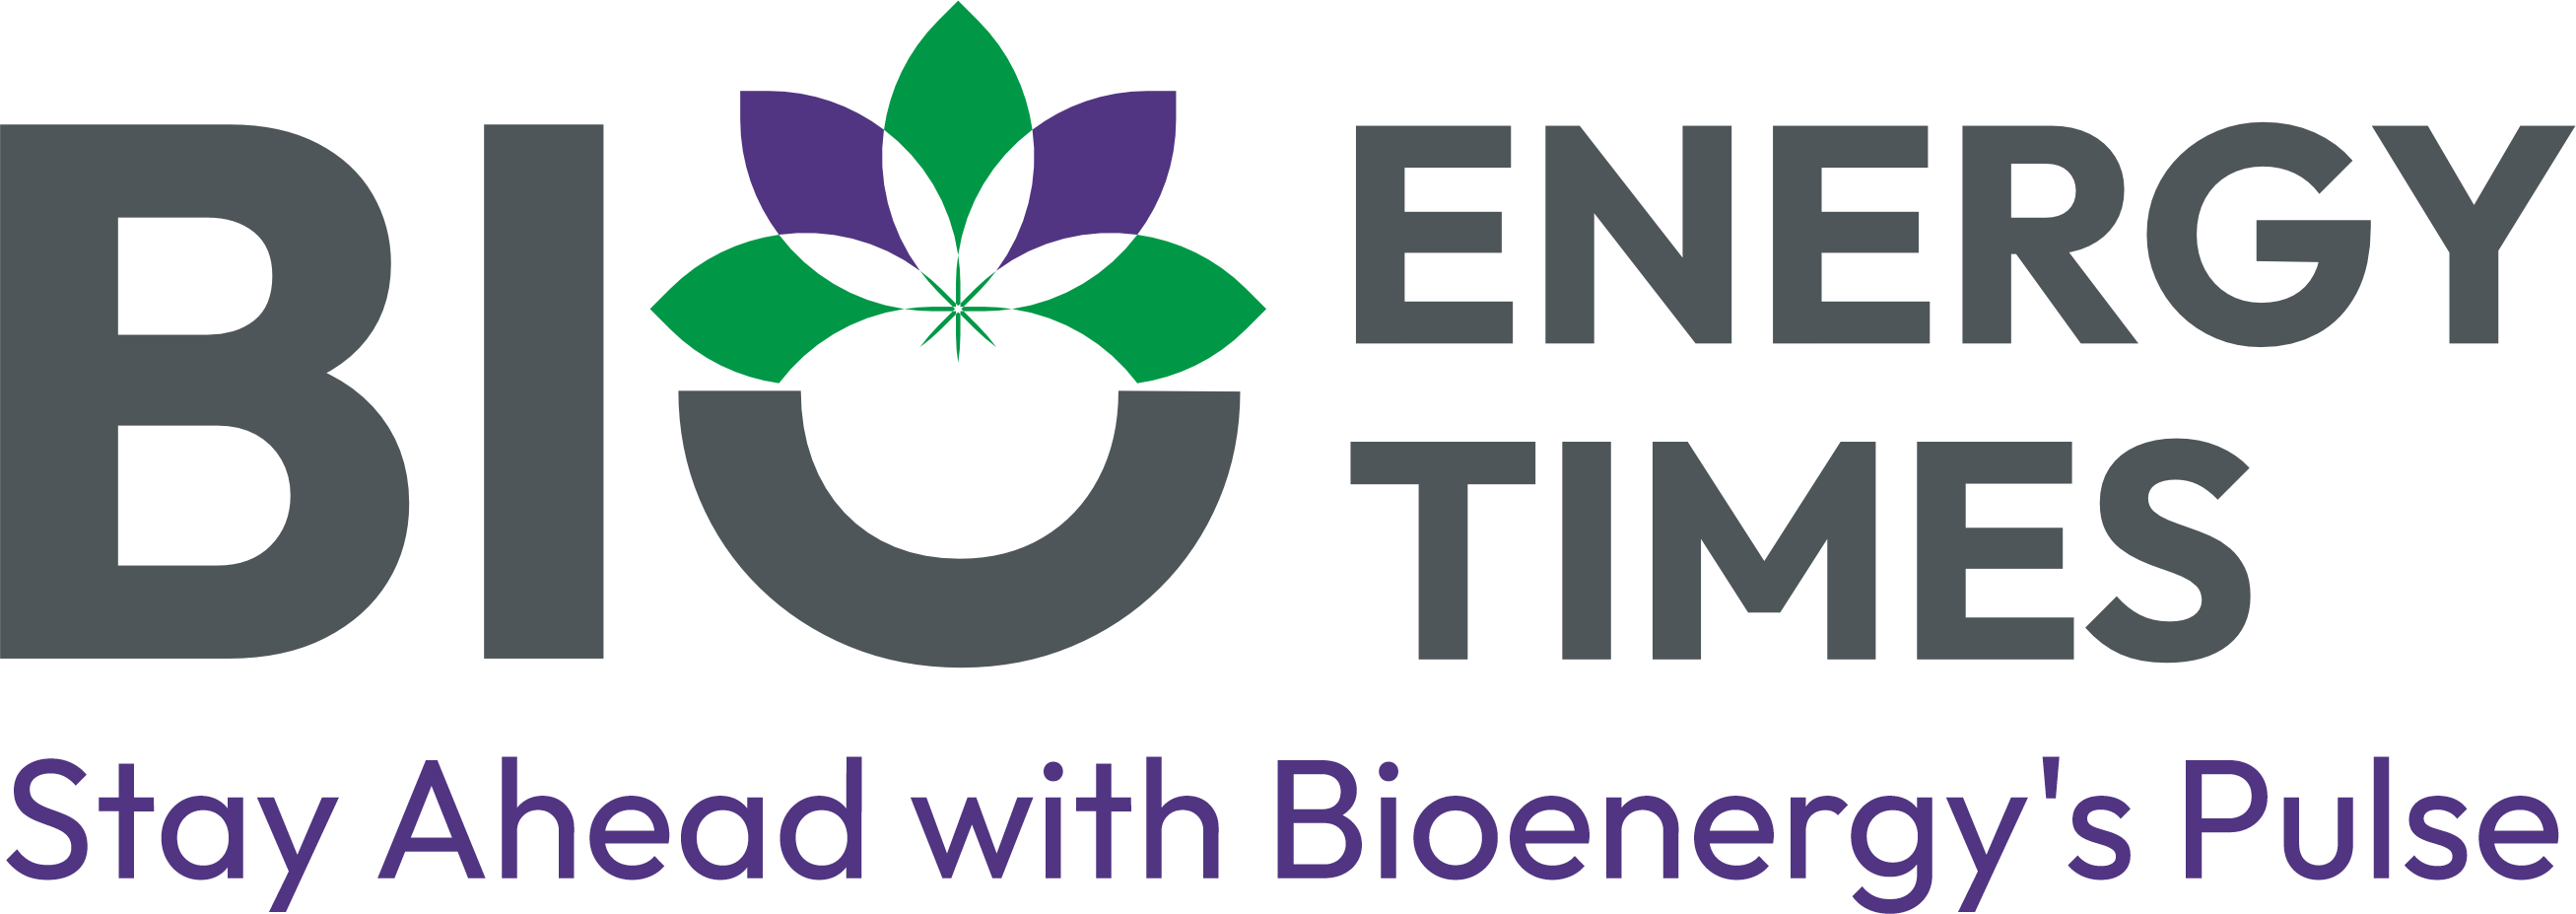 BioEnergy Times